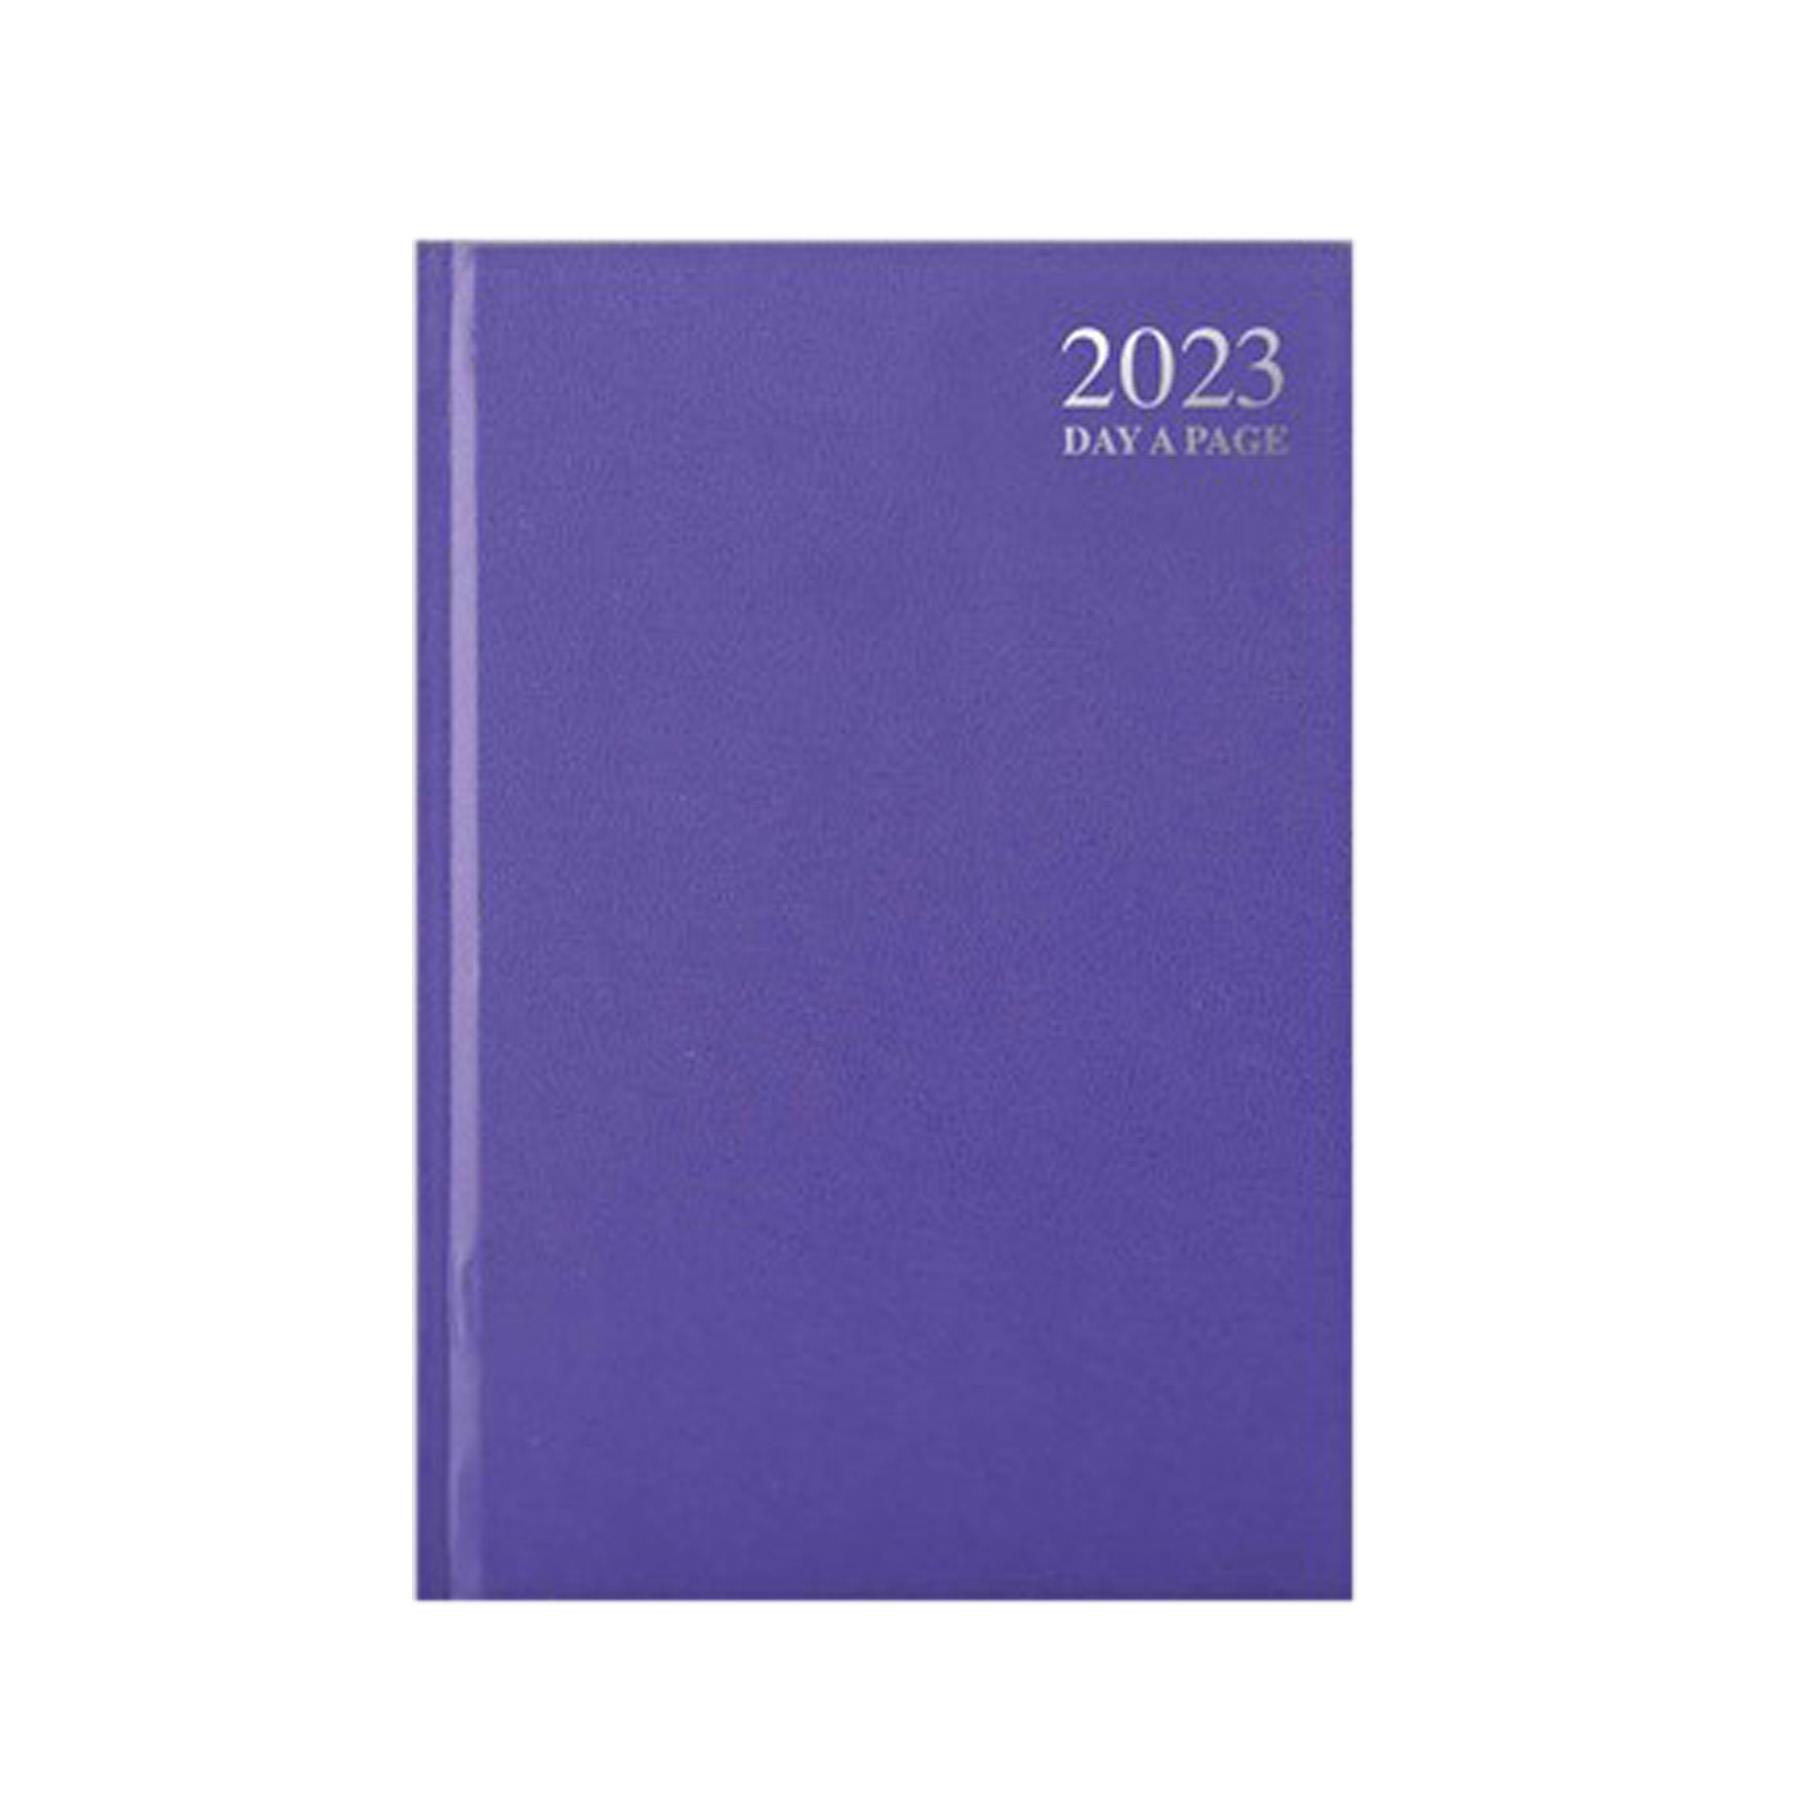 2023 A5 Hardback Day a Page Diary 3482 - Purple